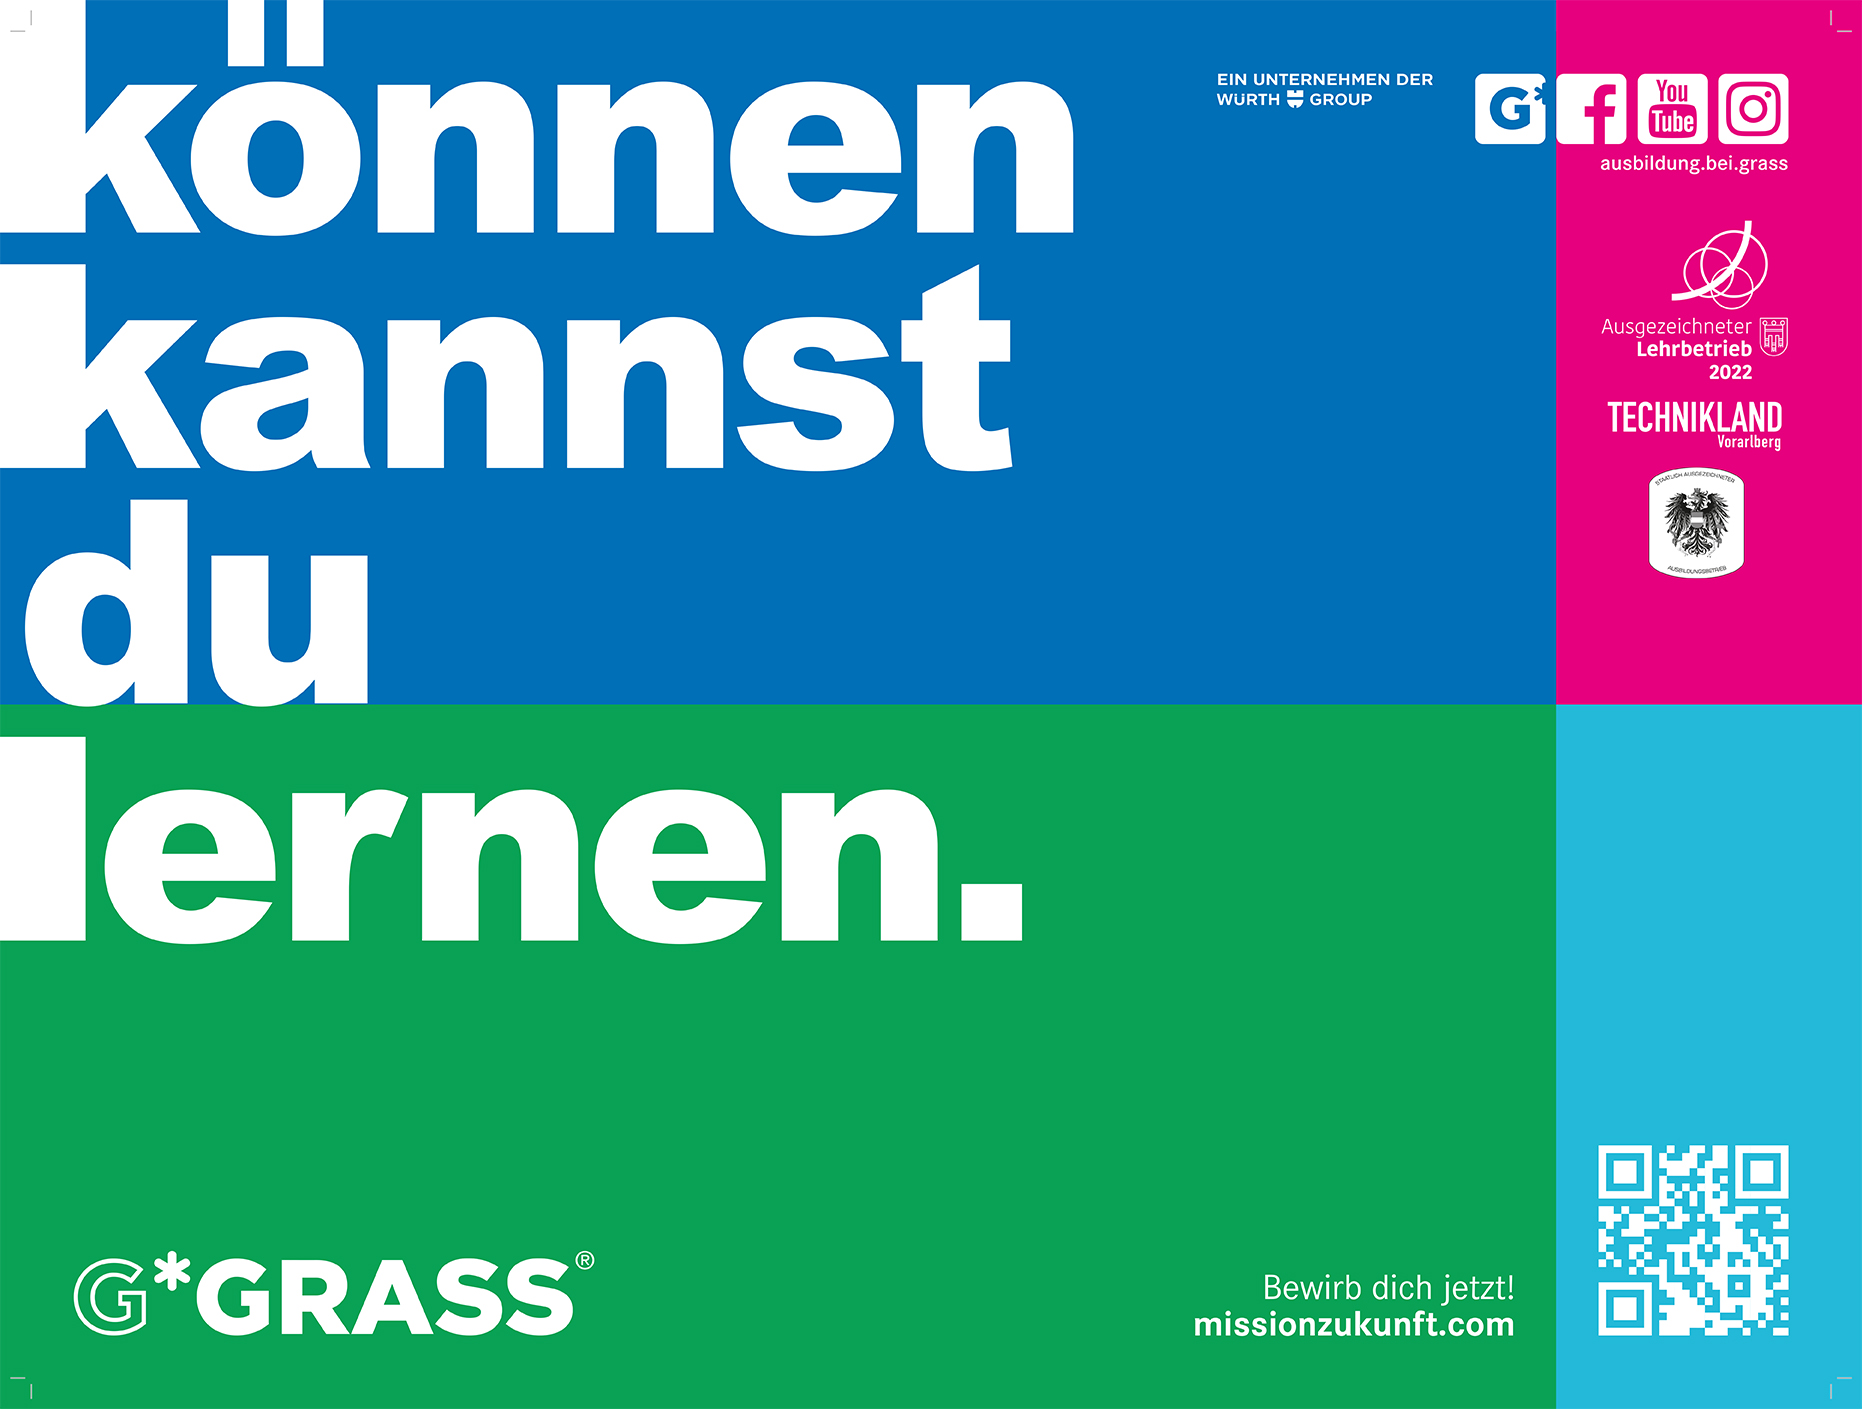 lehre24.at - Grass GmbH